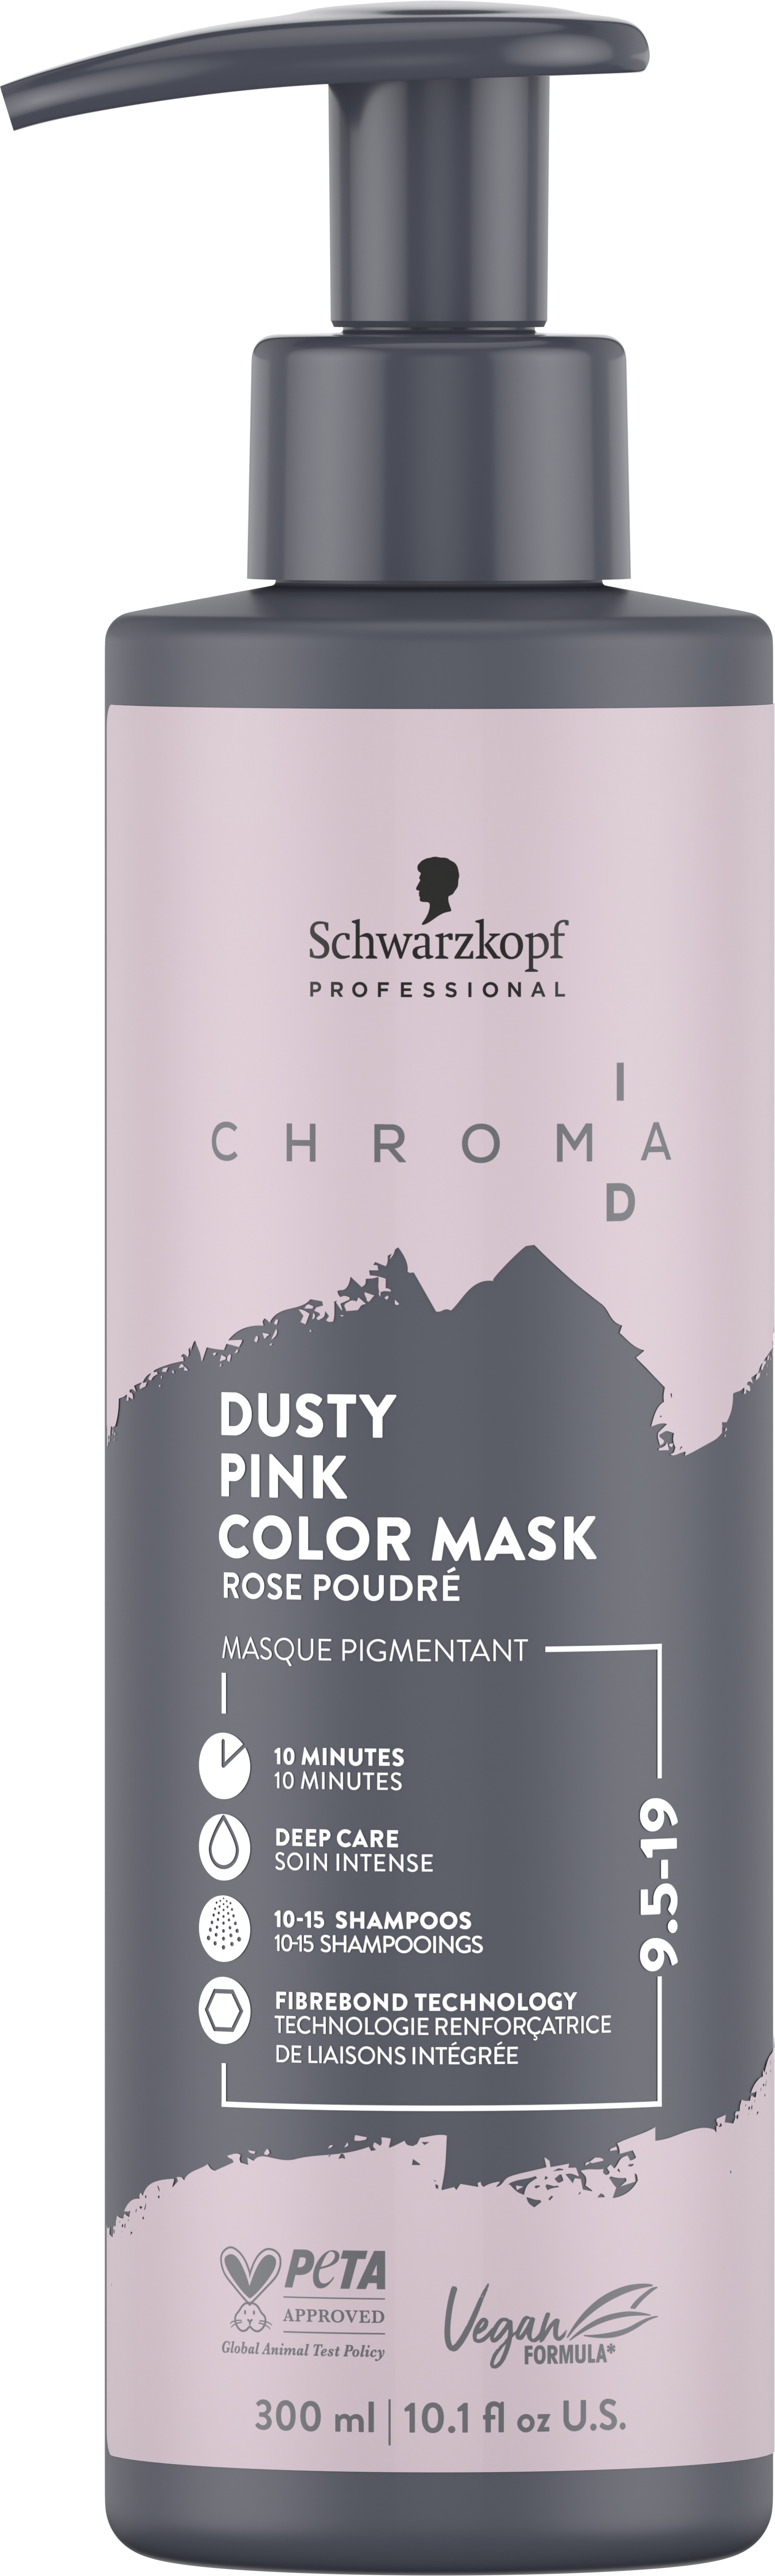 Produktbild von Chroma ID - Bonding Color Mask 9,5-19 Dusty Pink